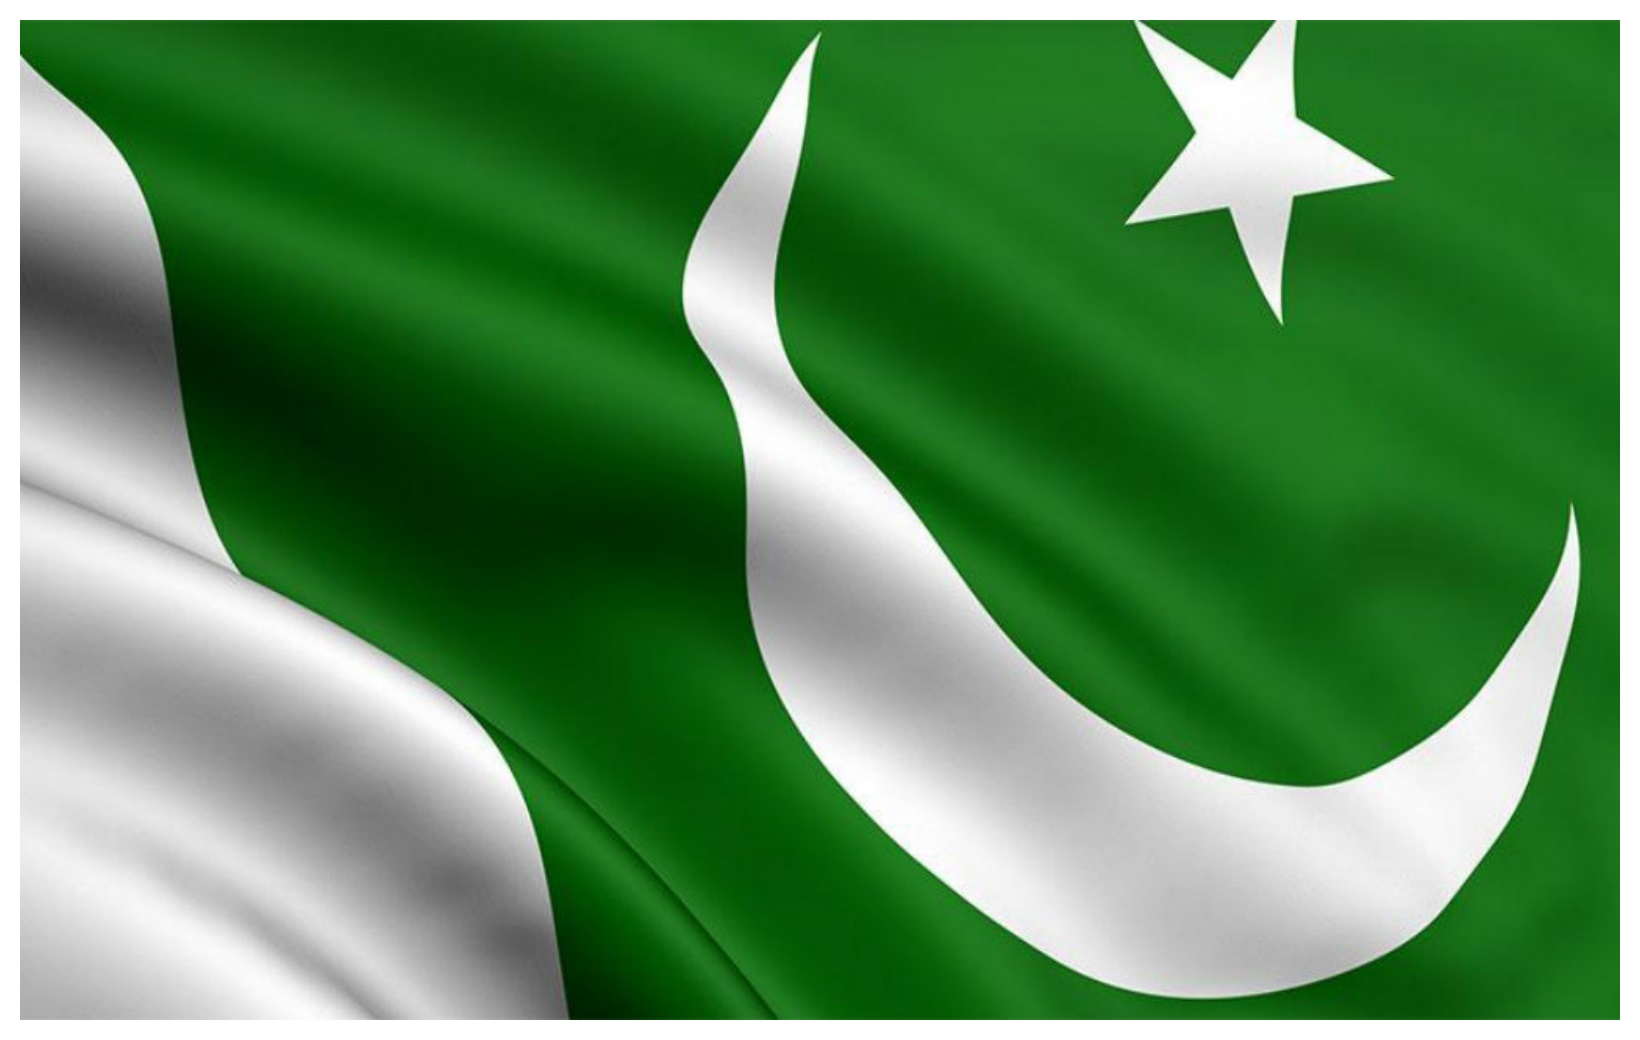 fond d'écran du drapeau du pakistan,vert,drapeau,police de caractère,symbole